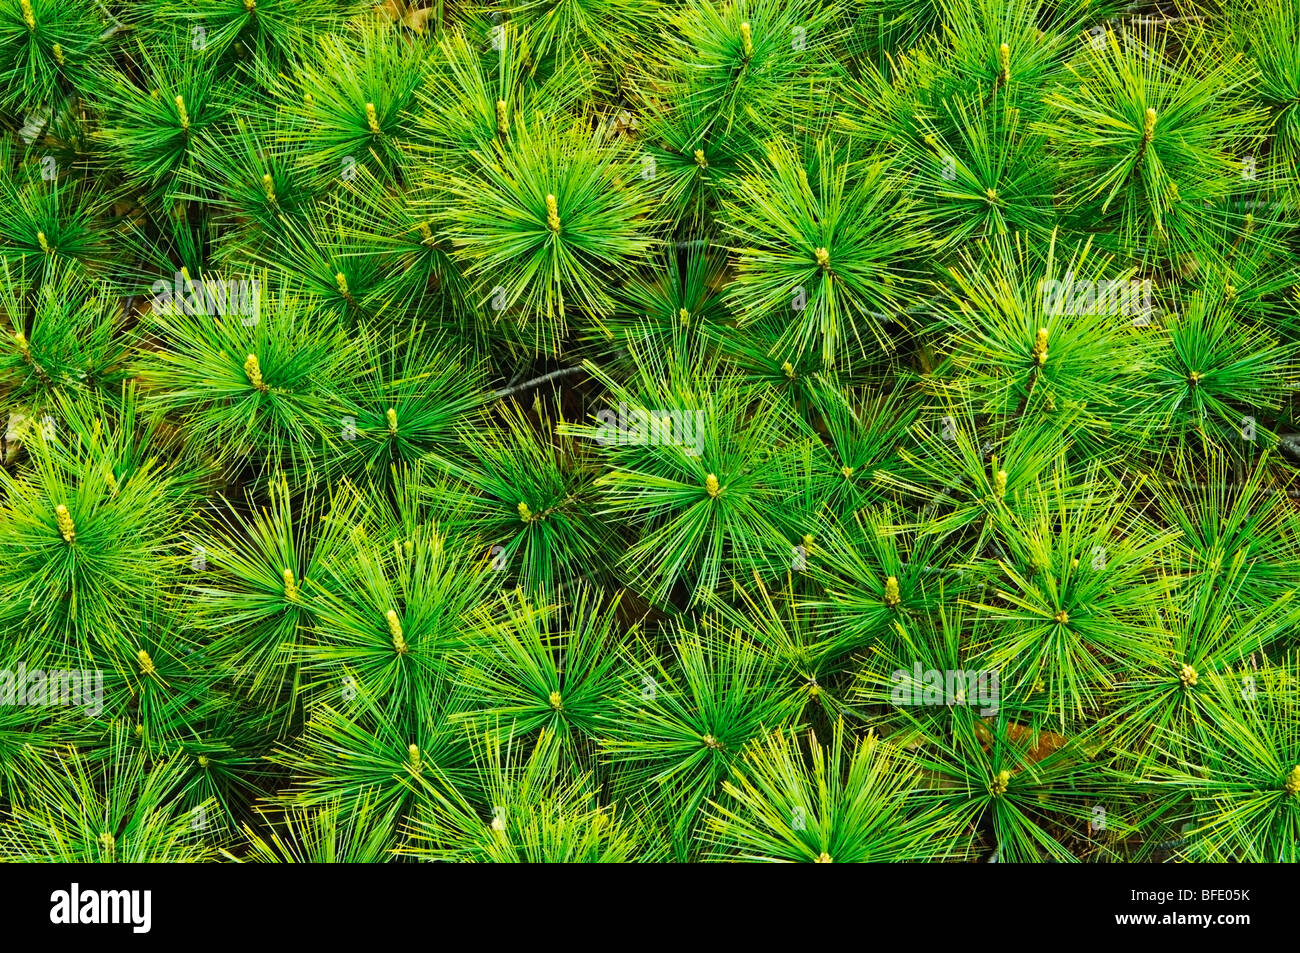 Close-up detail of Eastern white pine (Pinus strobus) needles, Killarney Provincial Park, Ontario, Canada Stock Photo